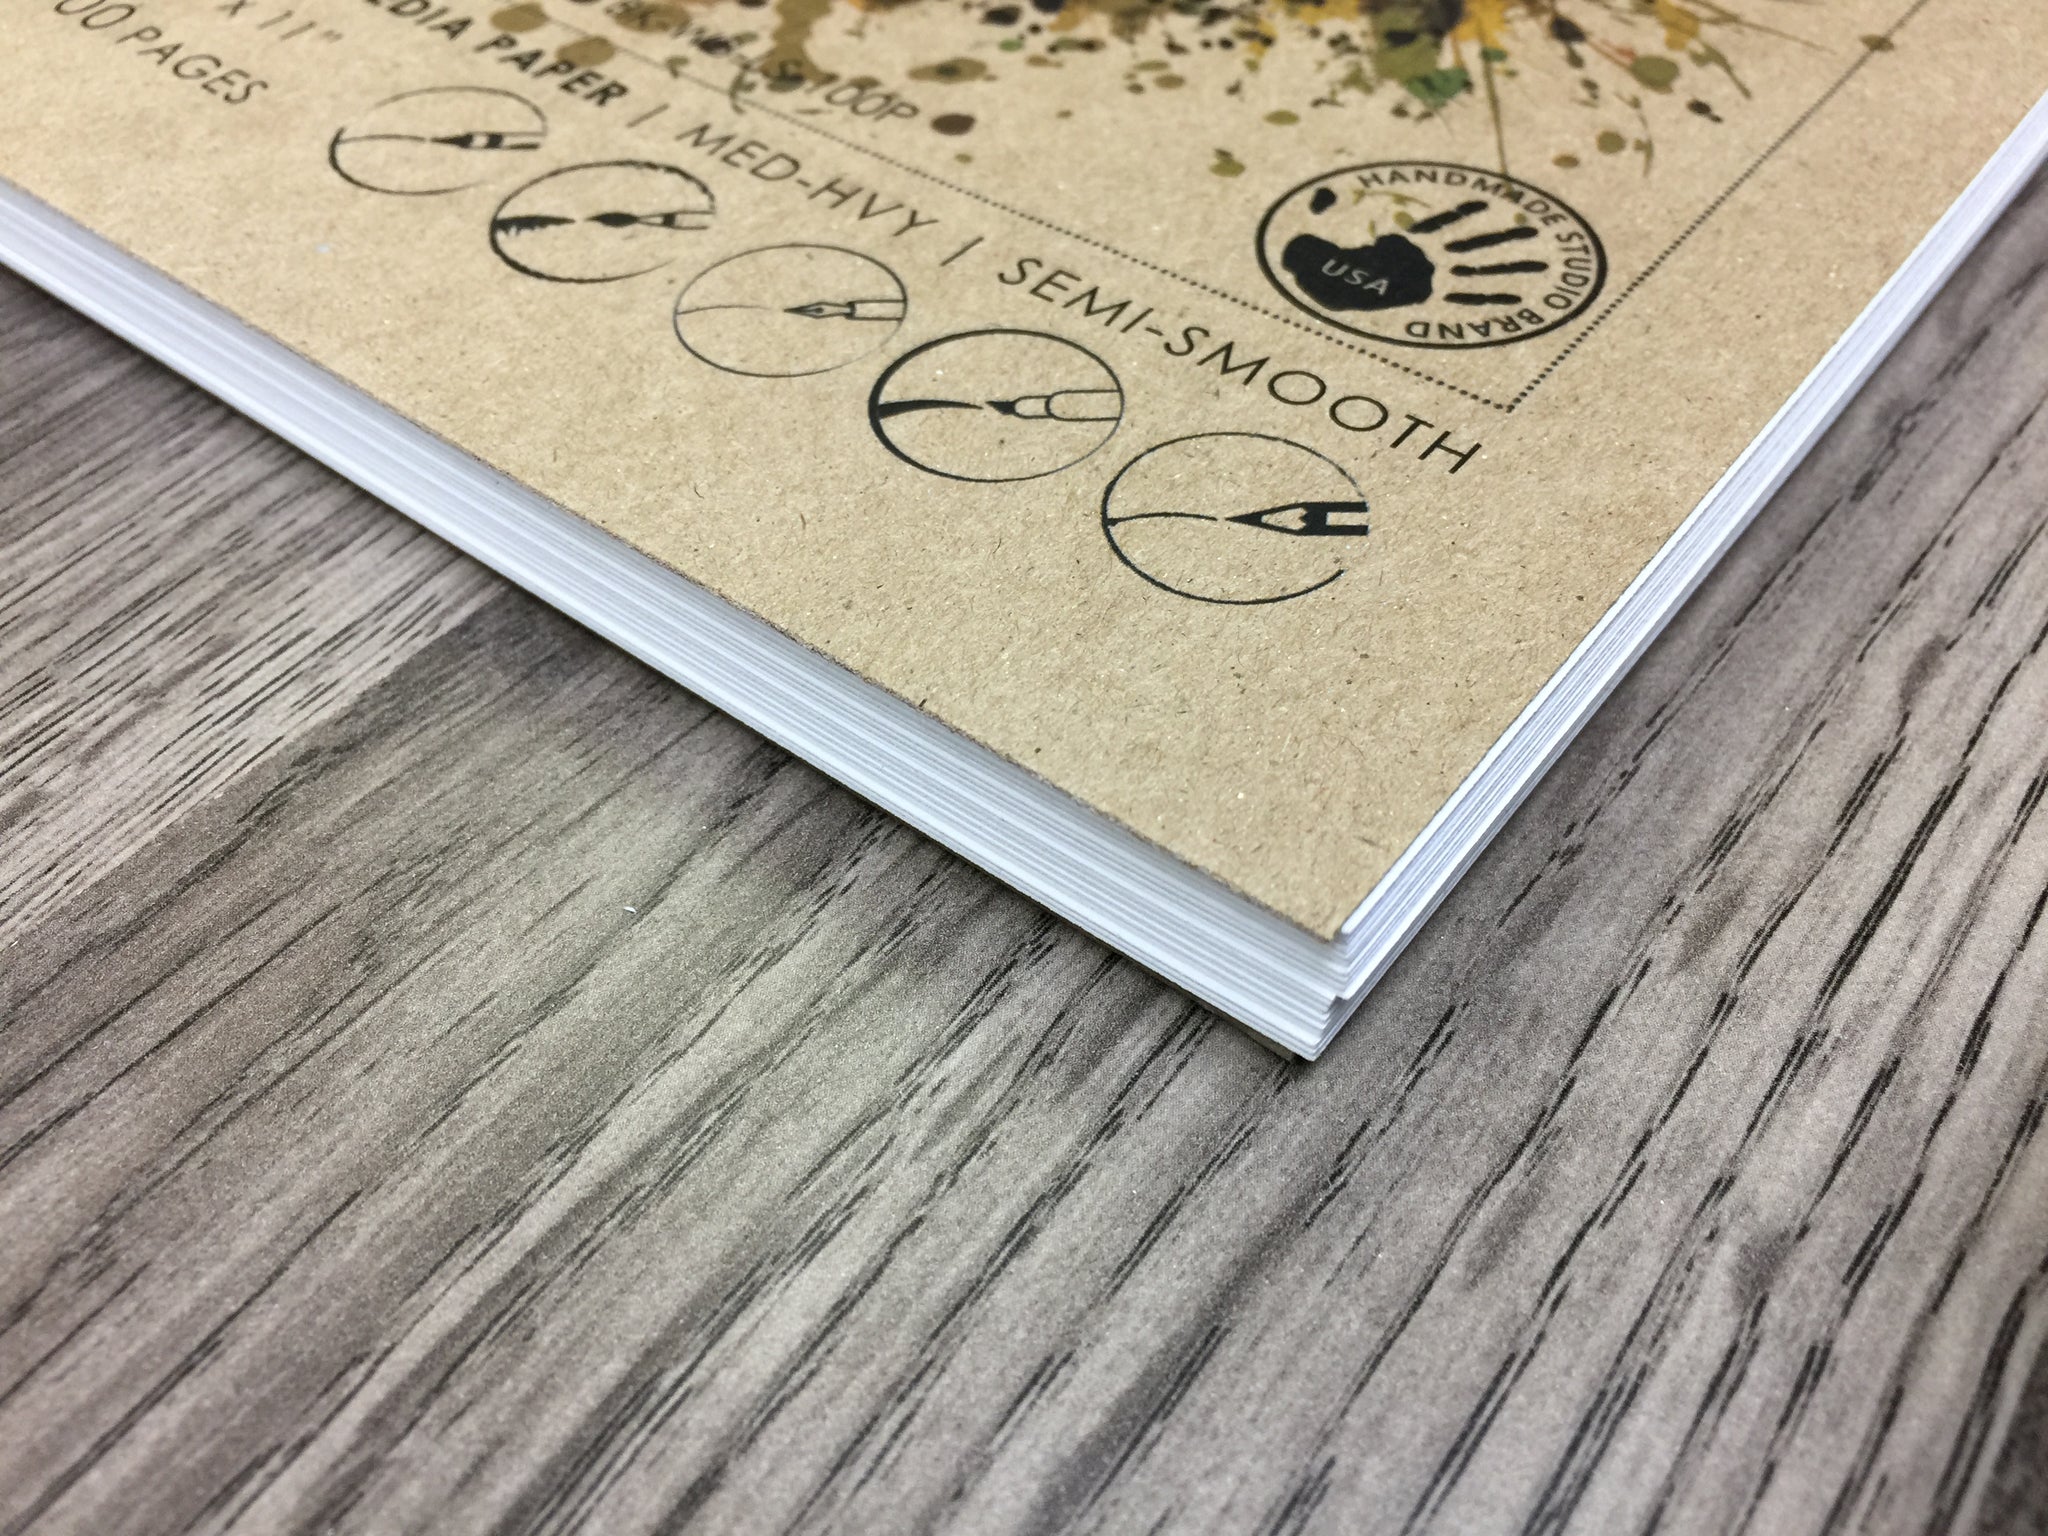 DRAW BOOK. Sketchbook. Spiral Bound. Pad Style. Multi-Media. (8.5 x 1 –  Design Ideation Studio